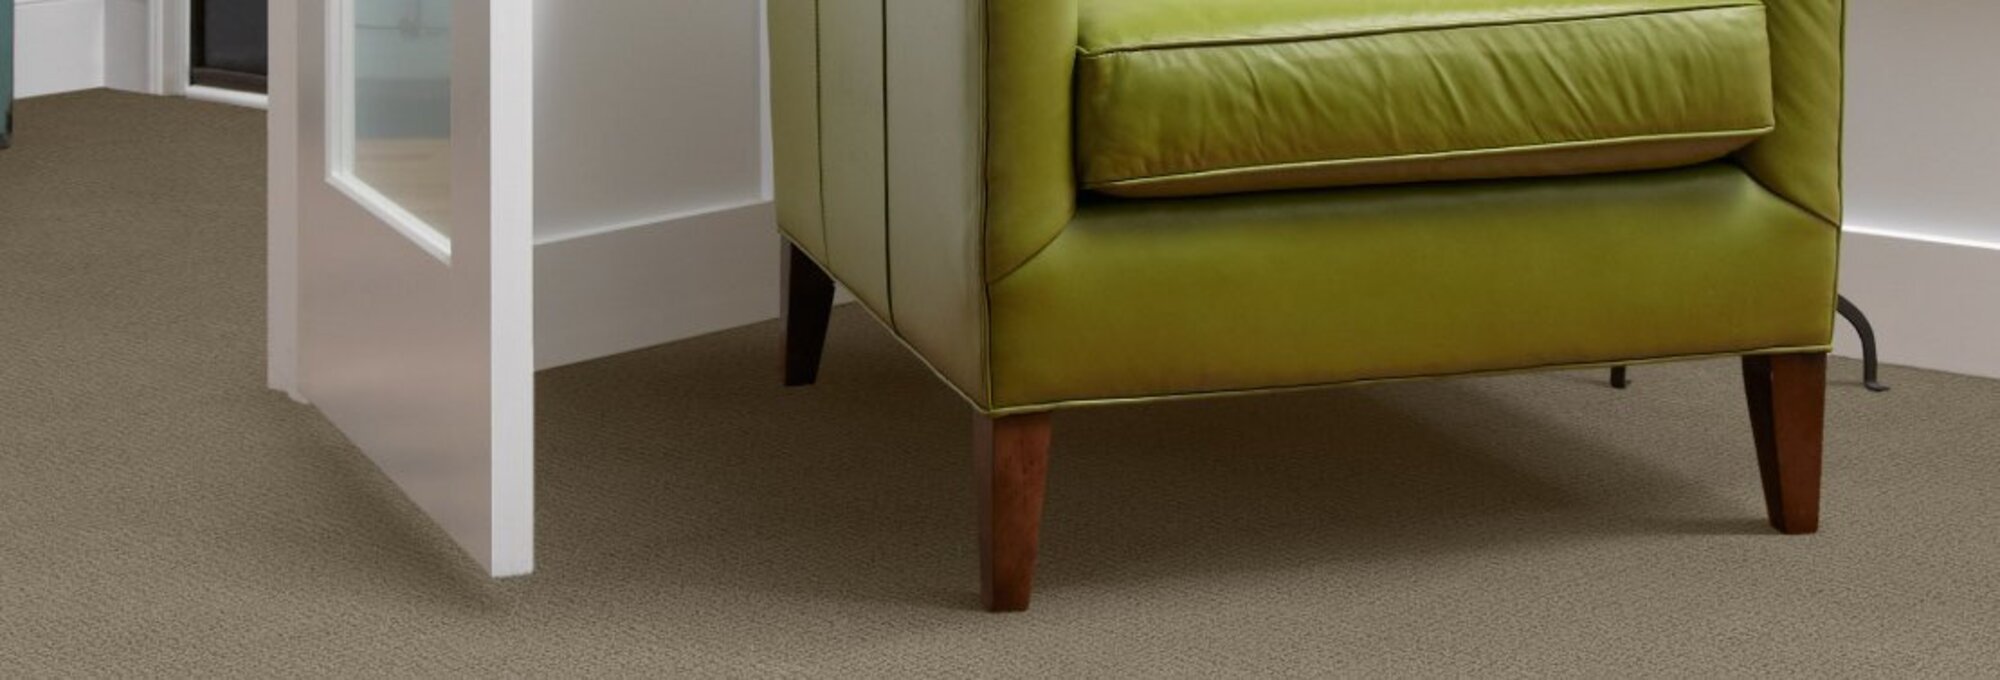 Green armchair on carpet - Carpet Clearance Warehouse in Keene